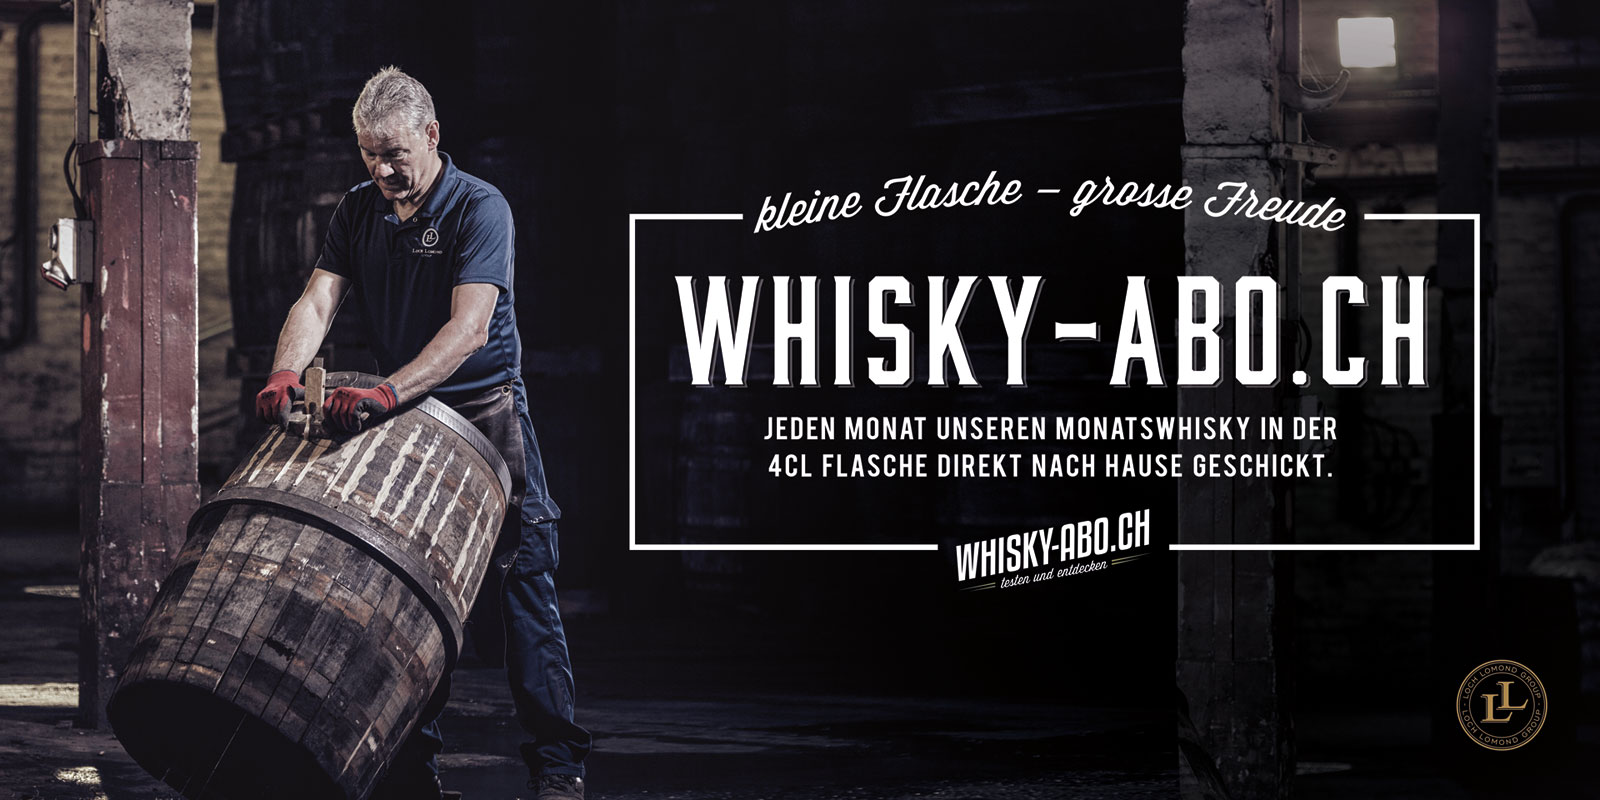 (c) Whisky-abo.ch